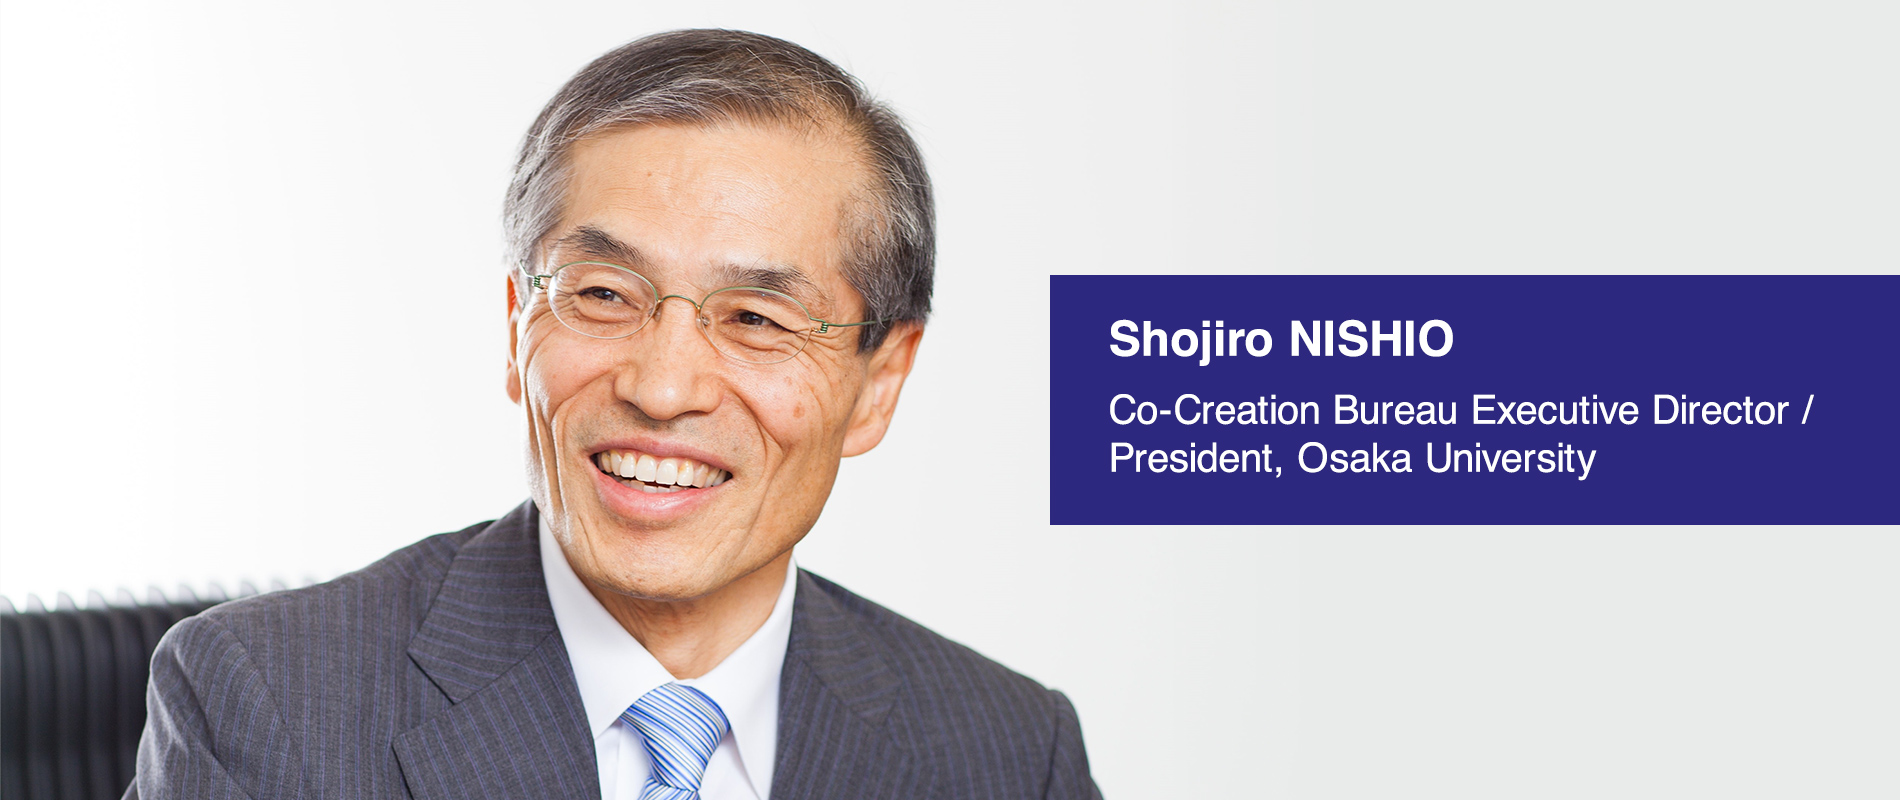 Shojiro NISHIO Co-Creation Bureau Executive Director / President, Osaka University
